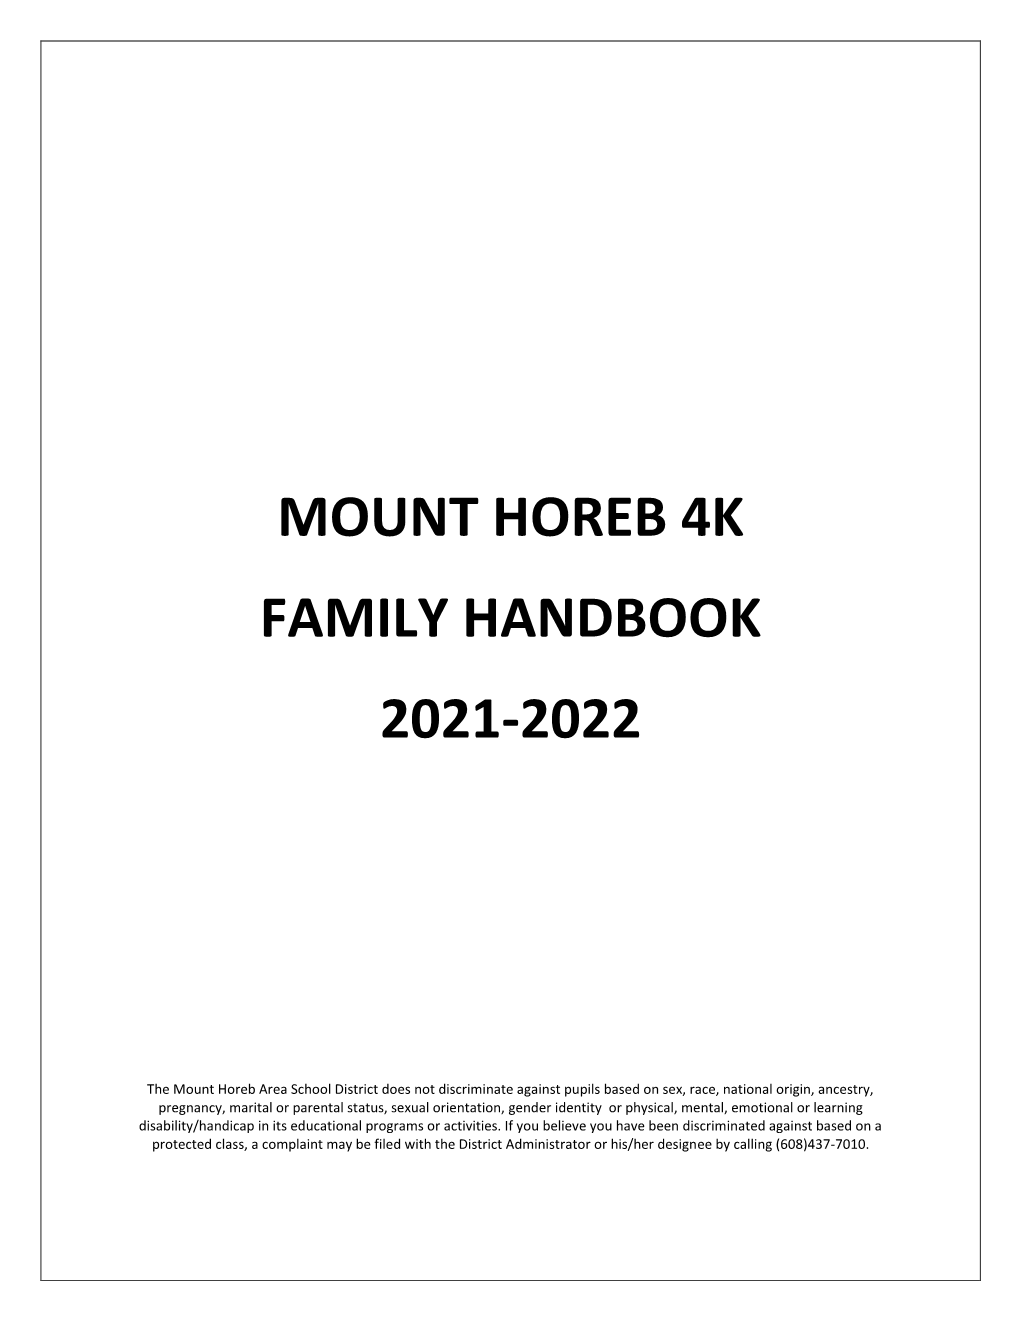 Mount Horeb 4K Family Handbook 2021-2022